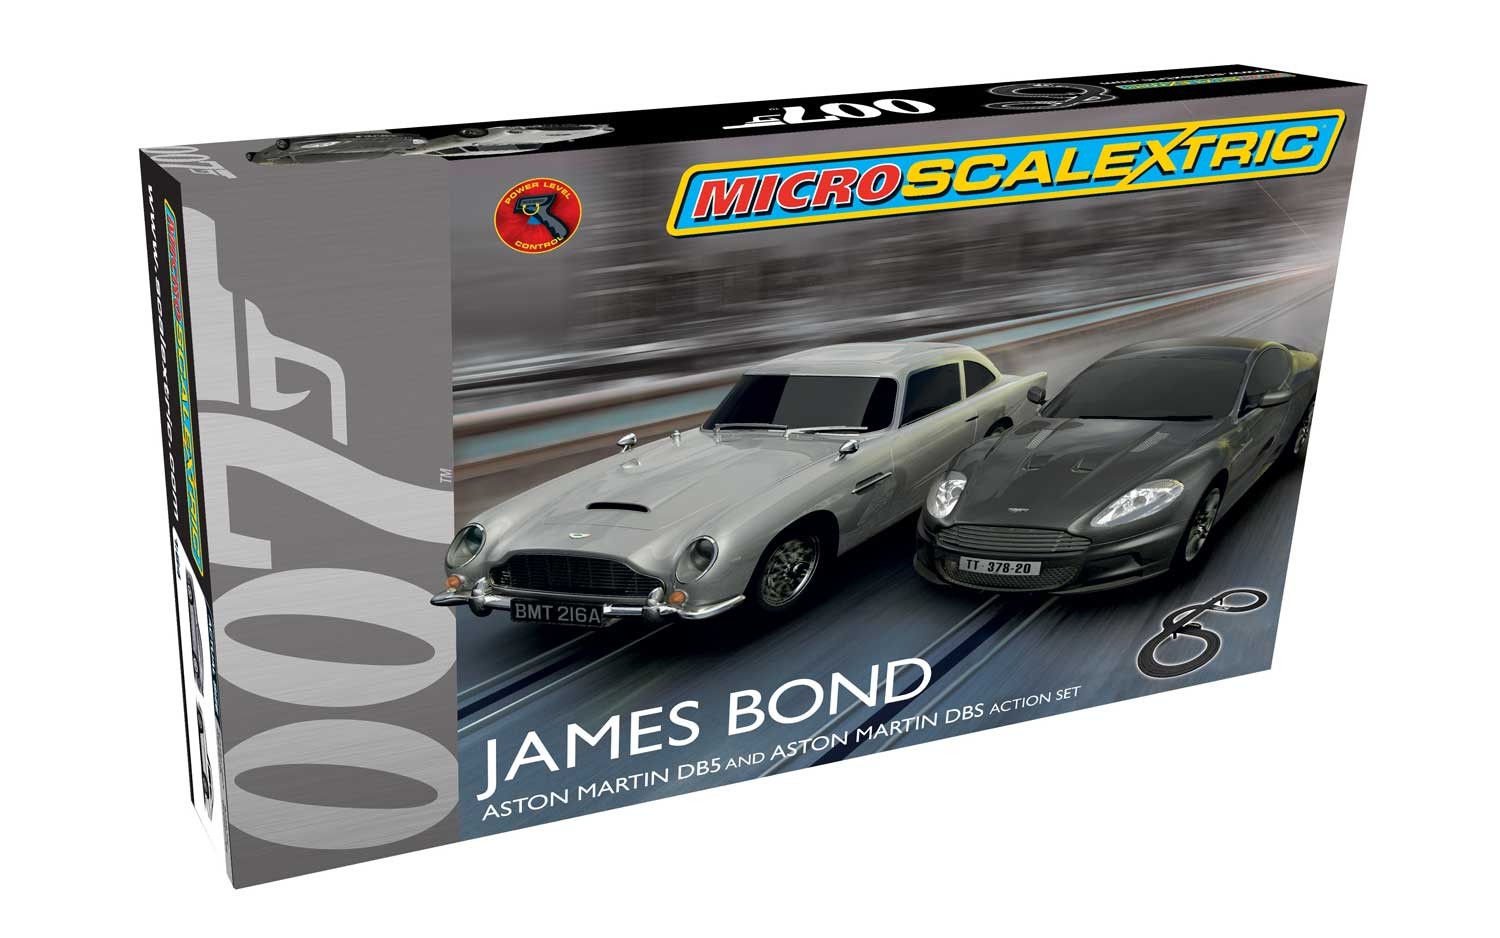 G1122-S Micro Scalextric James Bond